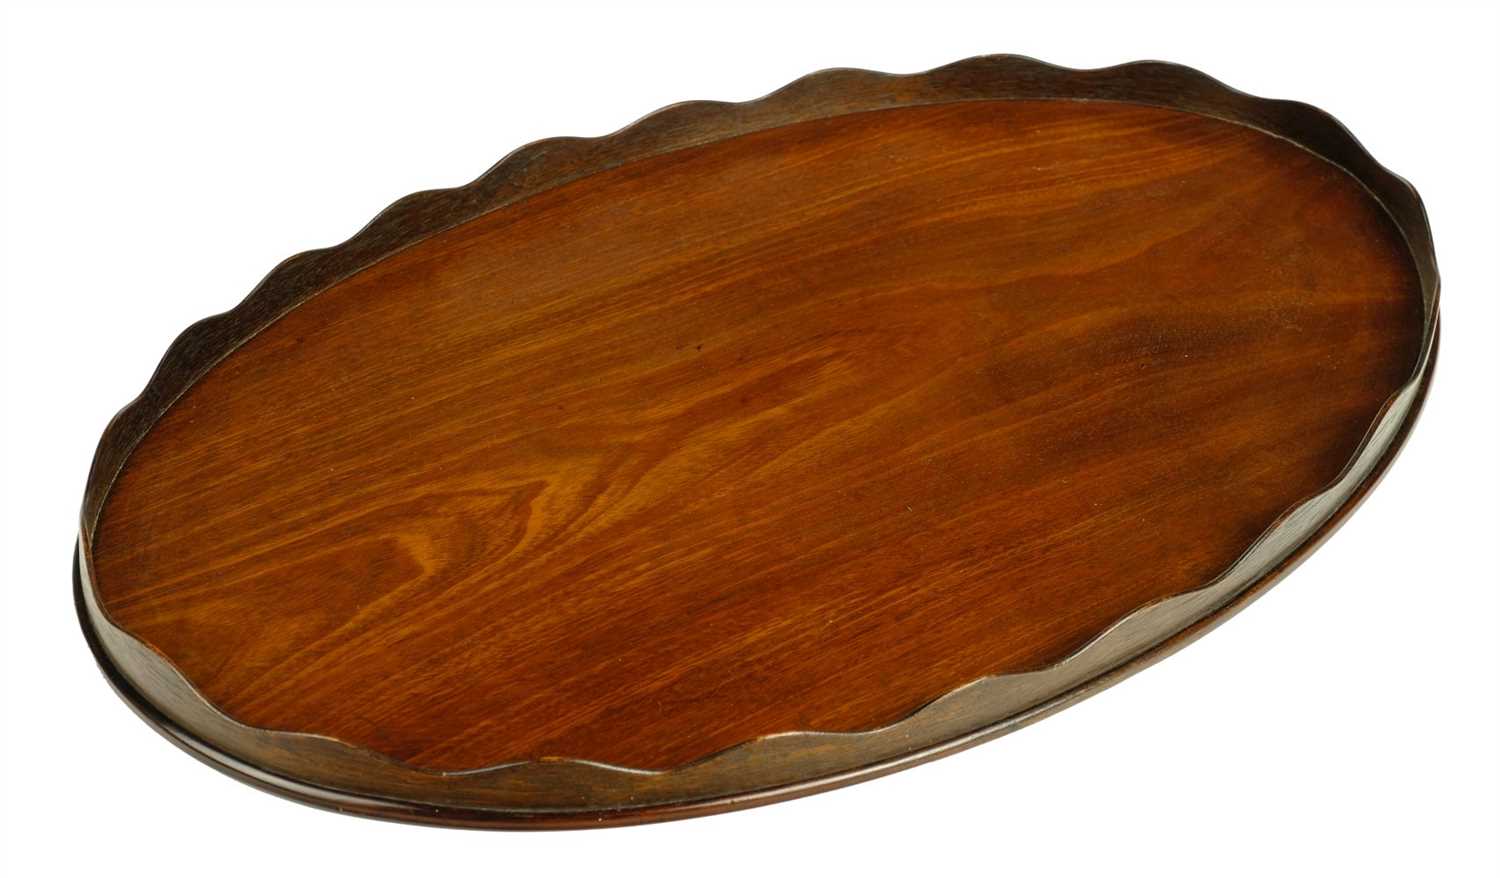 Lot 78 - Tray. An Edwardian mahogany tray in the George III style